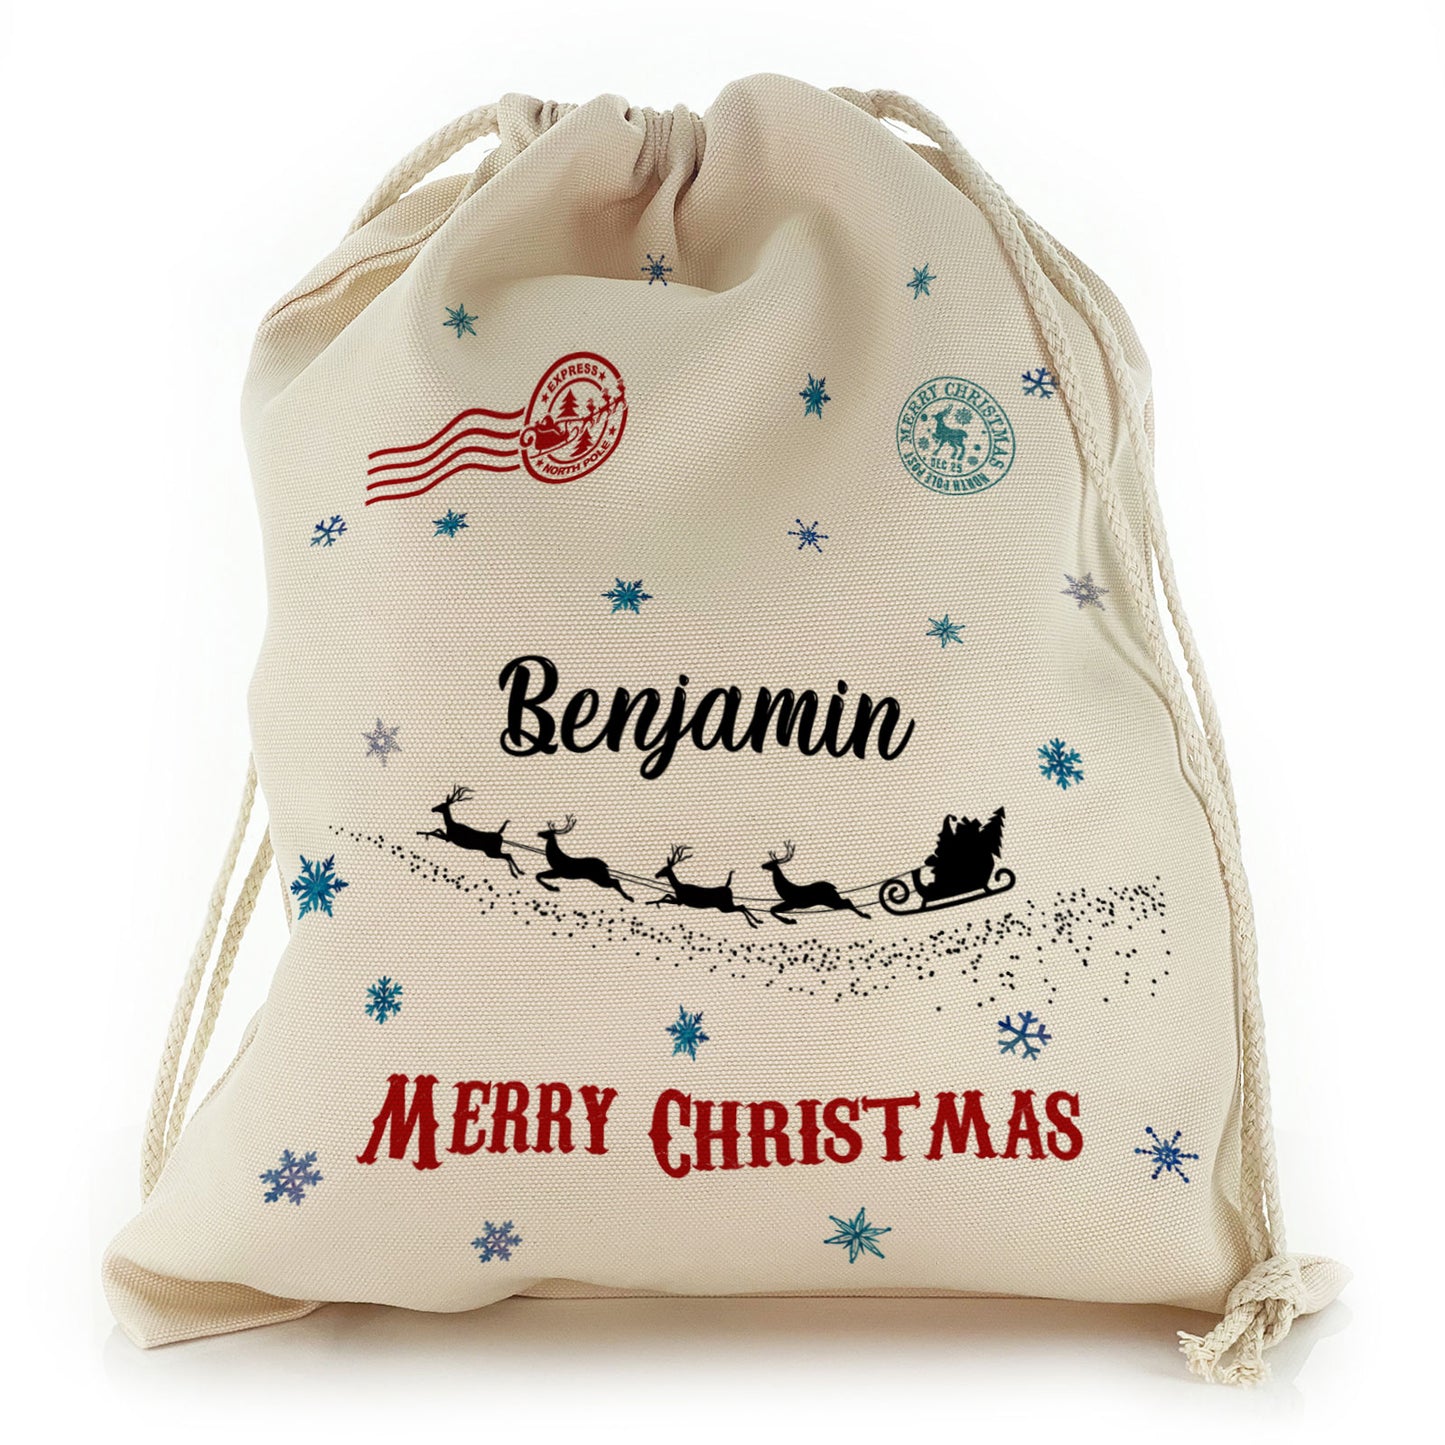 Personalised Christmas Gift Sack - Santas Express Delivery